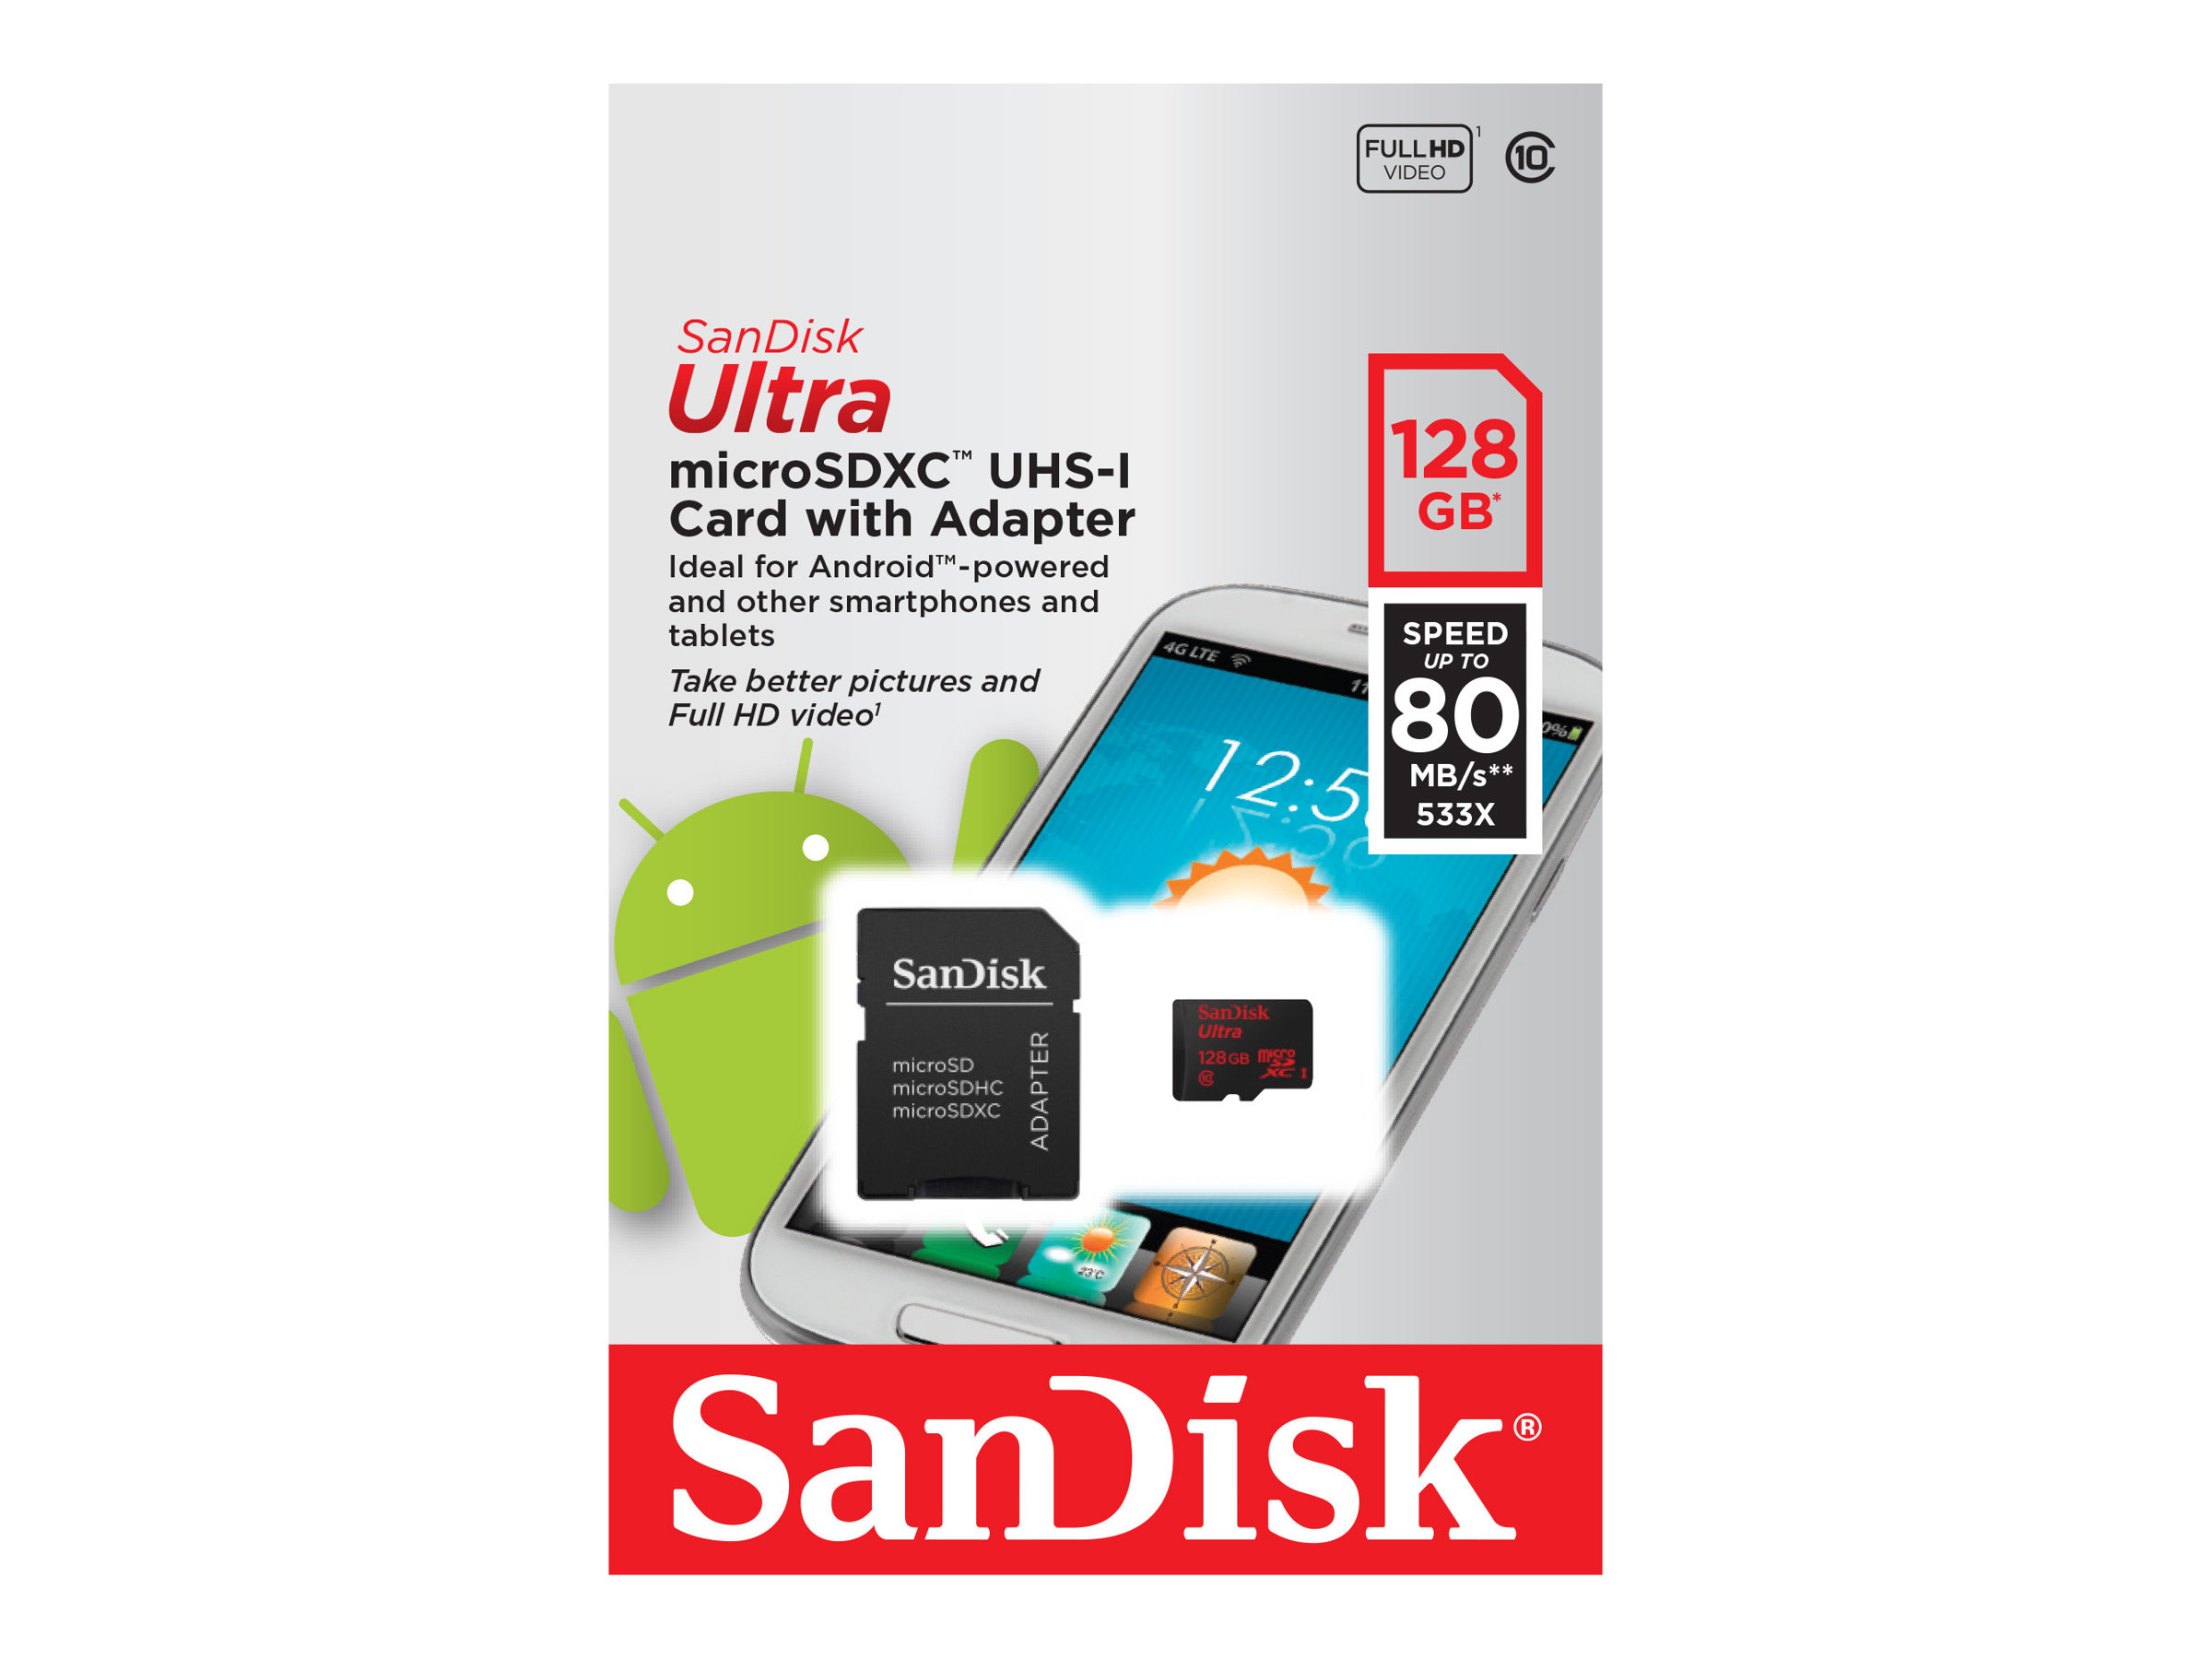 SanDisk 64GB ImageMate Pro microSDXC UHS 1 Memory Card - Up to 200MB/s-  SDSQXBZ0-64G-Awcka